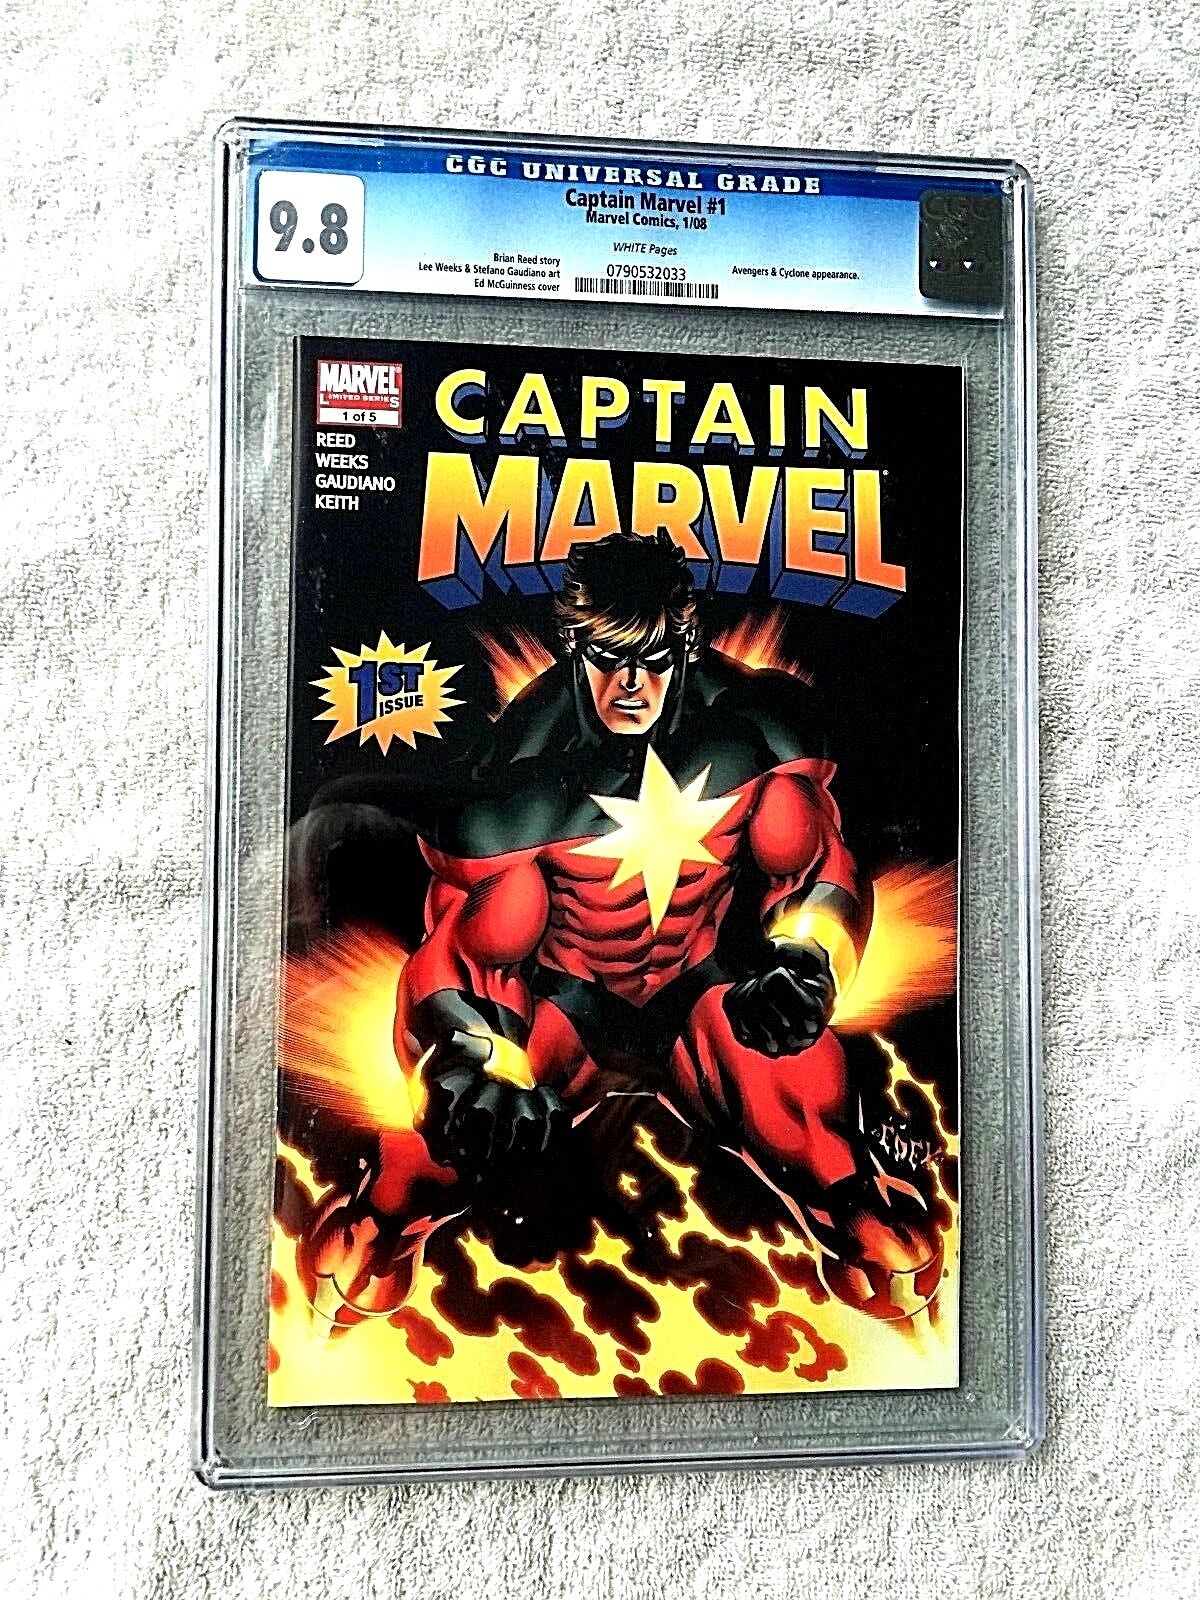 Captain Marvel #1 January 2008 CGC 9.8 white pages bonus free reader all 5 books